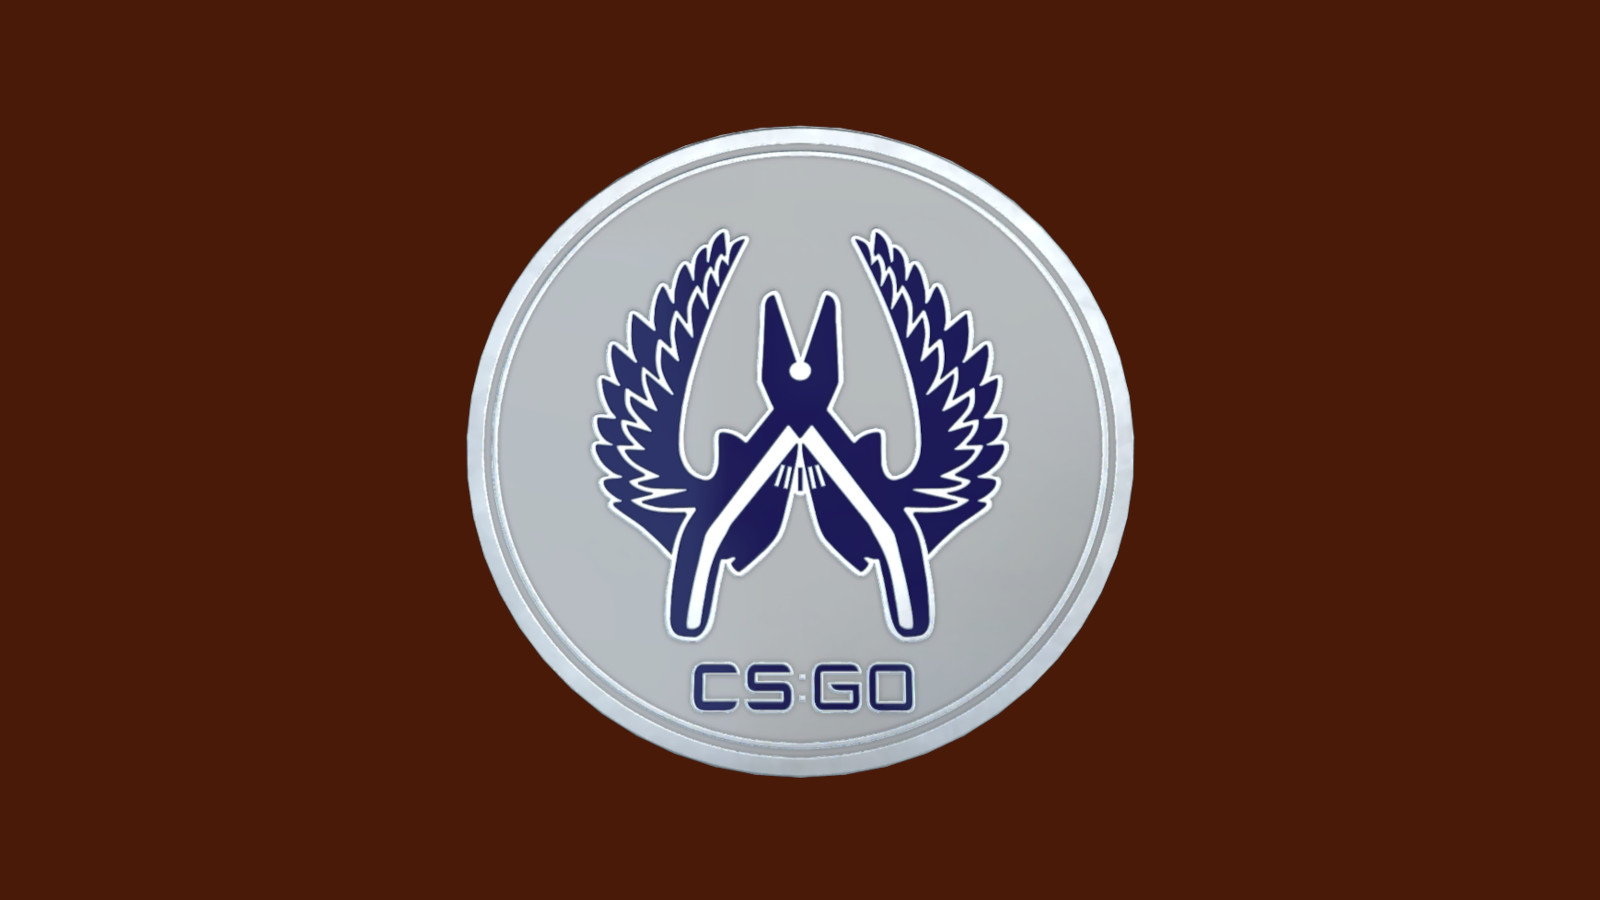 CS:GO - Series 3 - Guardian 3 Collectible Pin 225.98 $